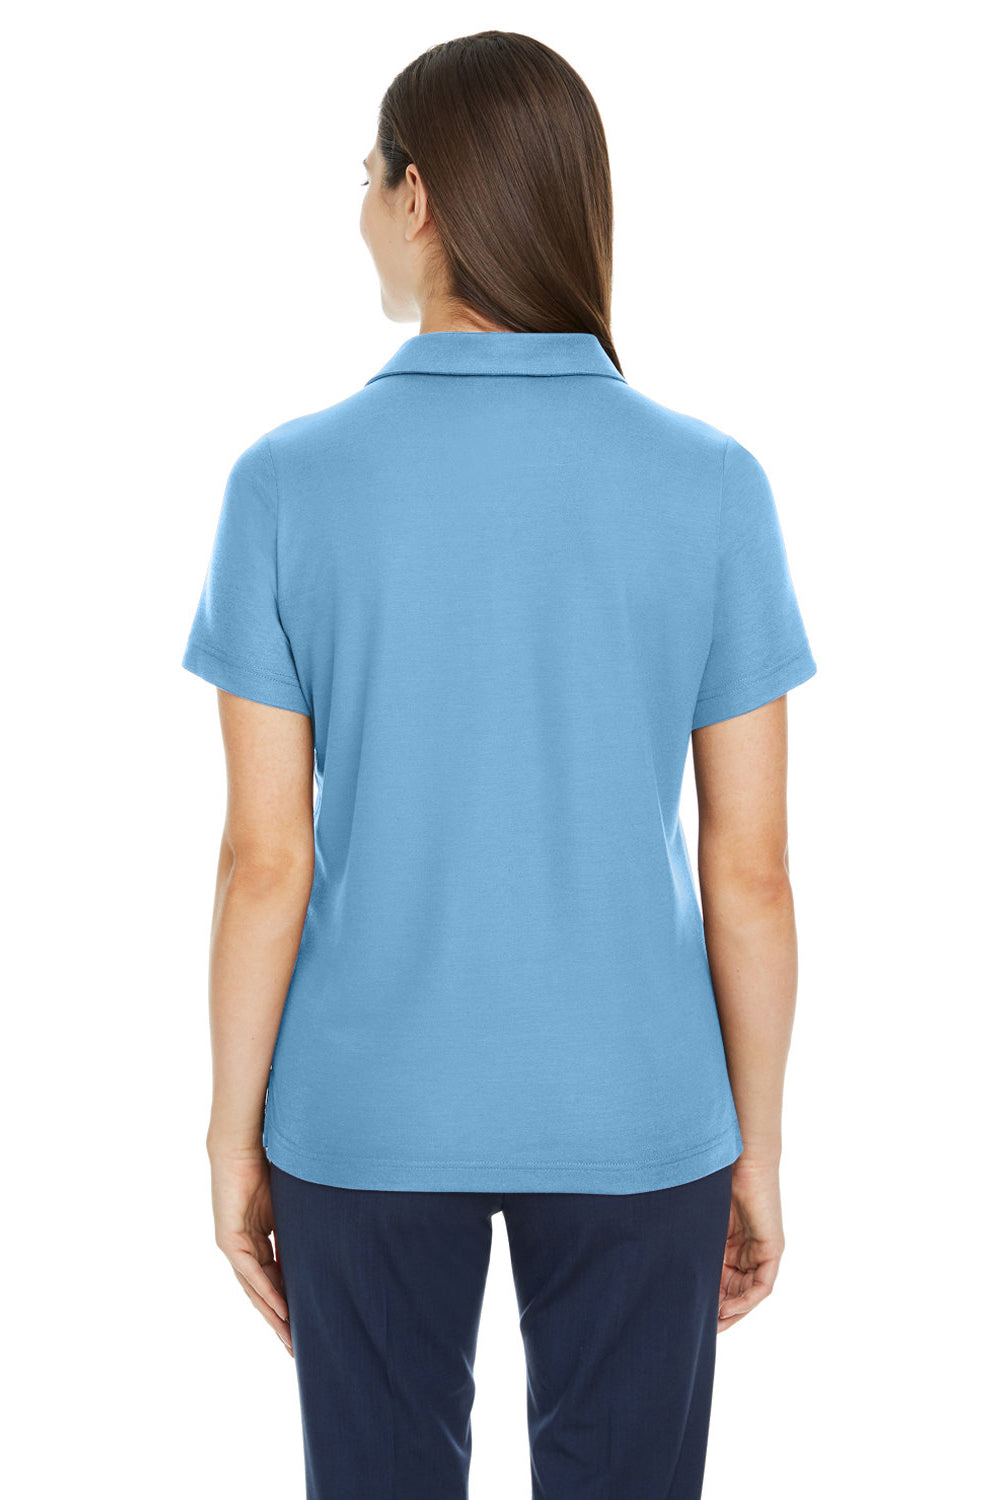 Core 365 CE112W Womens Fusion ChromaSoft Performance Moisture Wicking Pique Short Sleeve Polo Shirt Columbia Blue Back